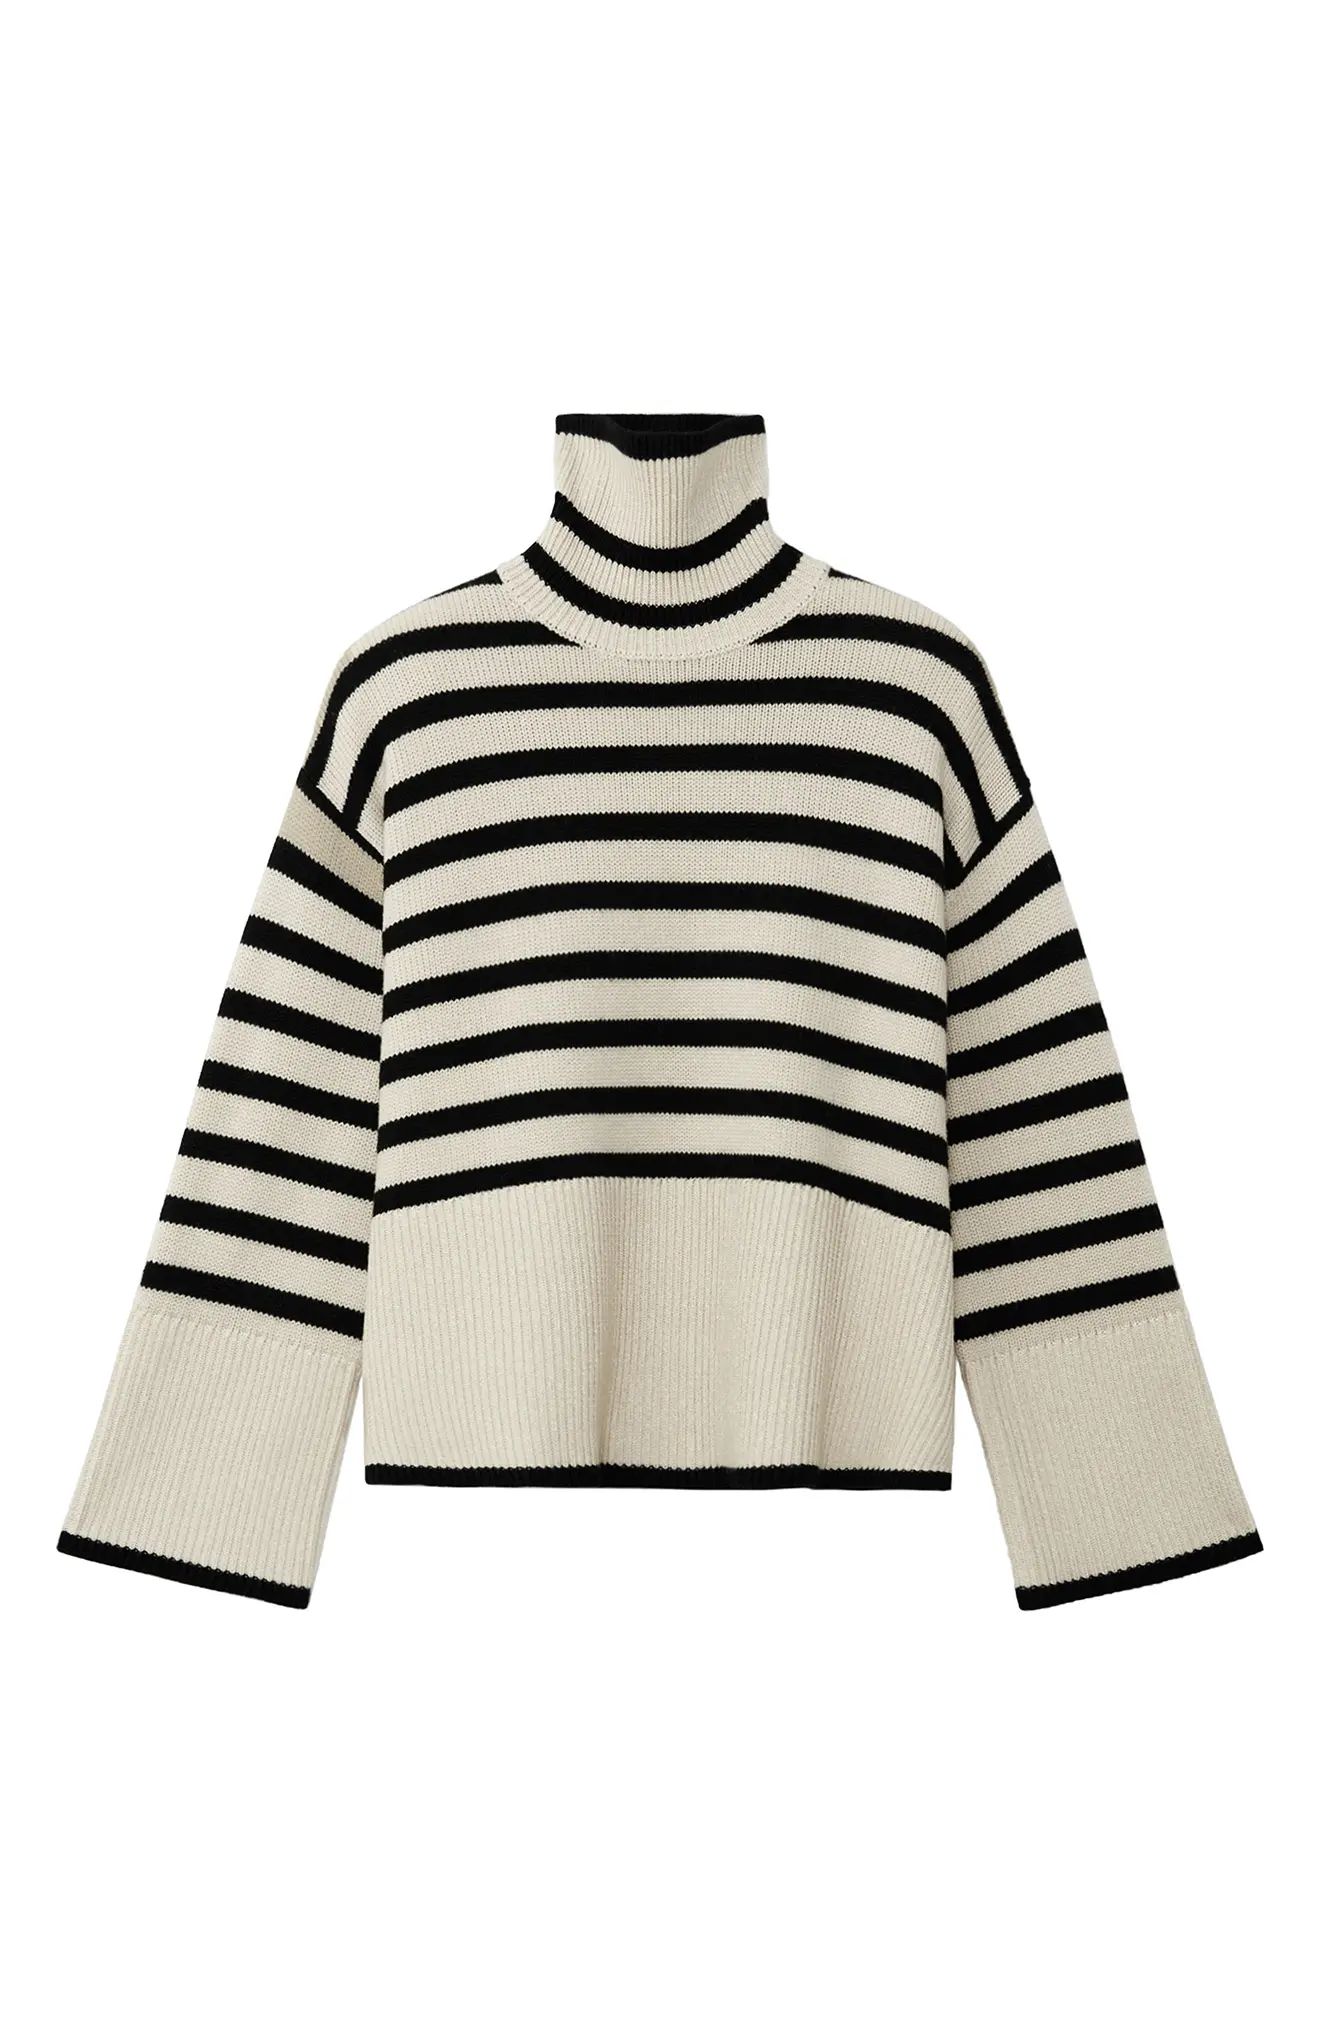 Toteme Stripe Wool Blend Turtleneck Sweater in Light Sand Stripe at Nordstrom, Size Medium | Nordstrom